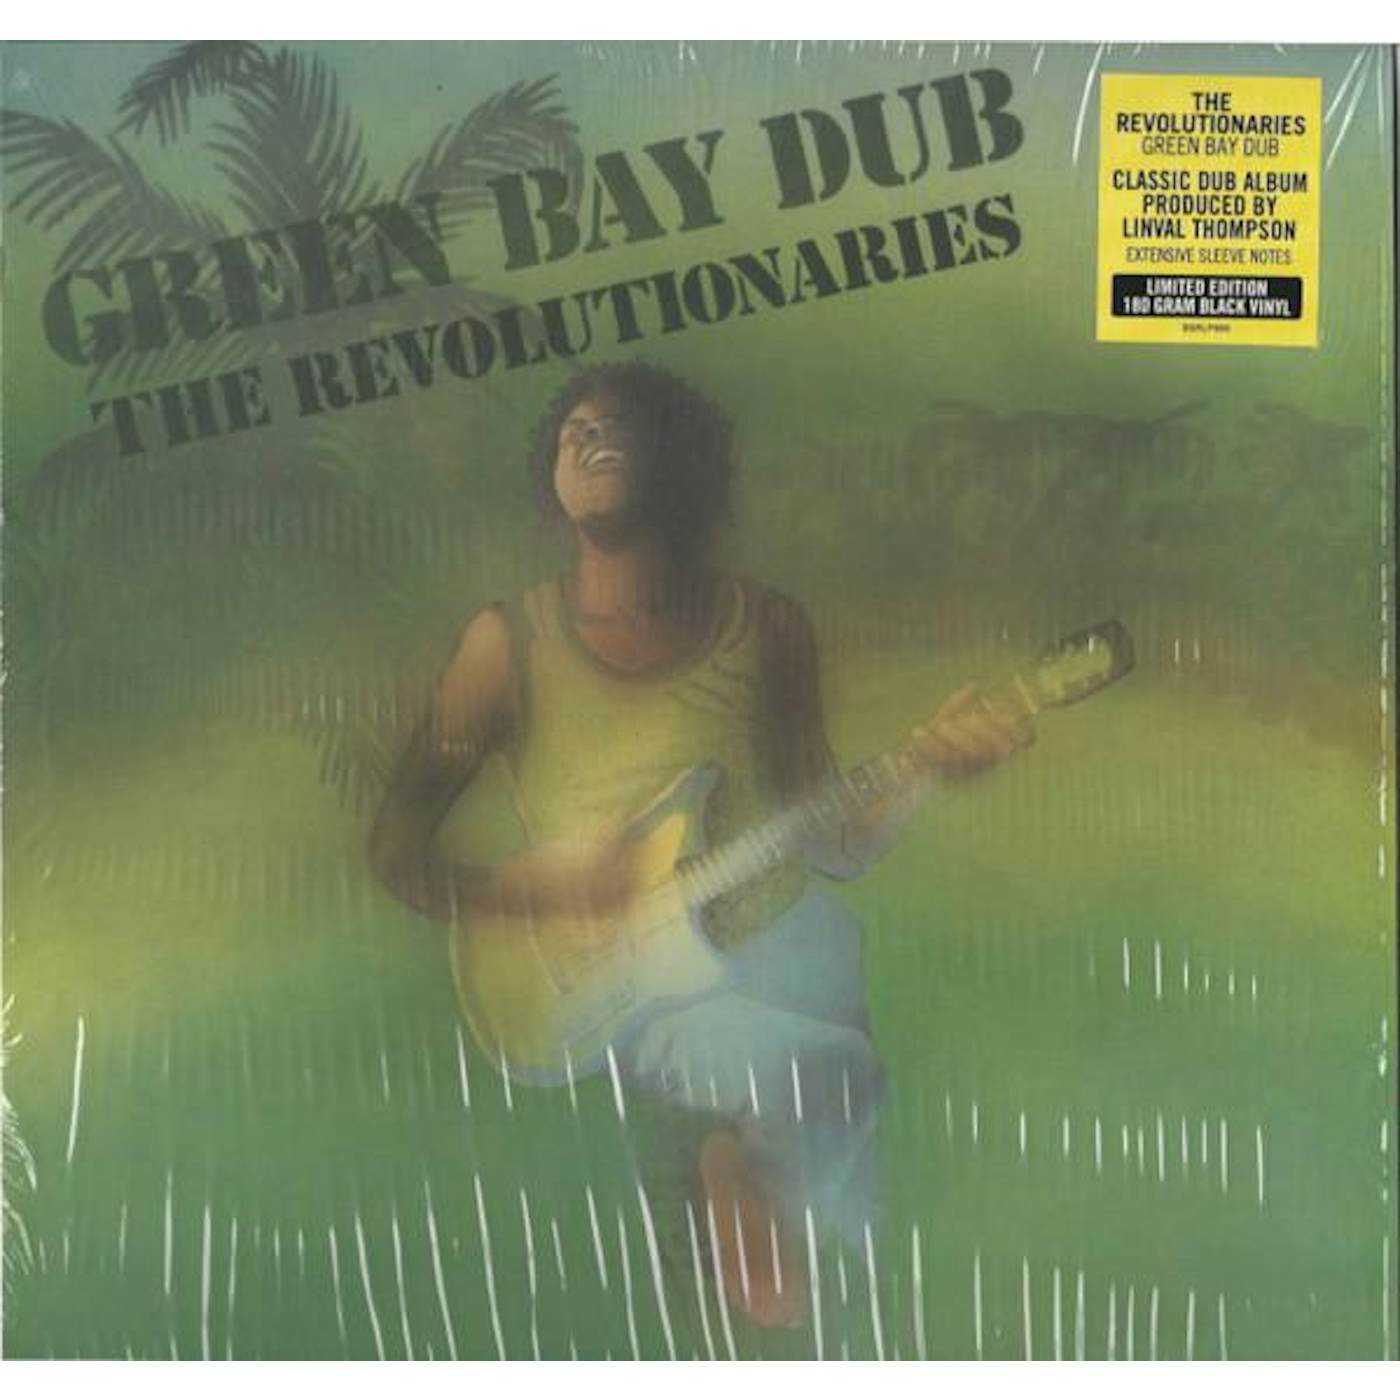 The Revolutionaries GREEN BAY DUB Vinyl Record